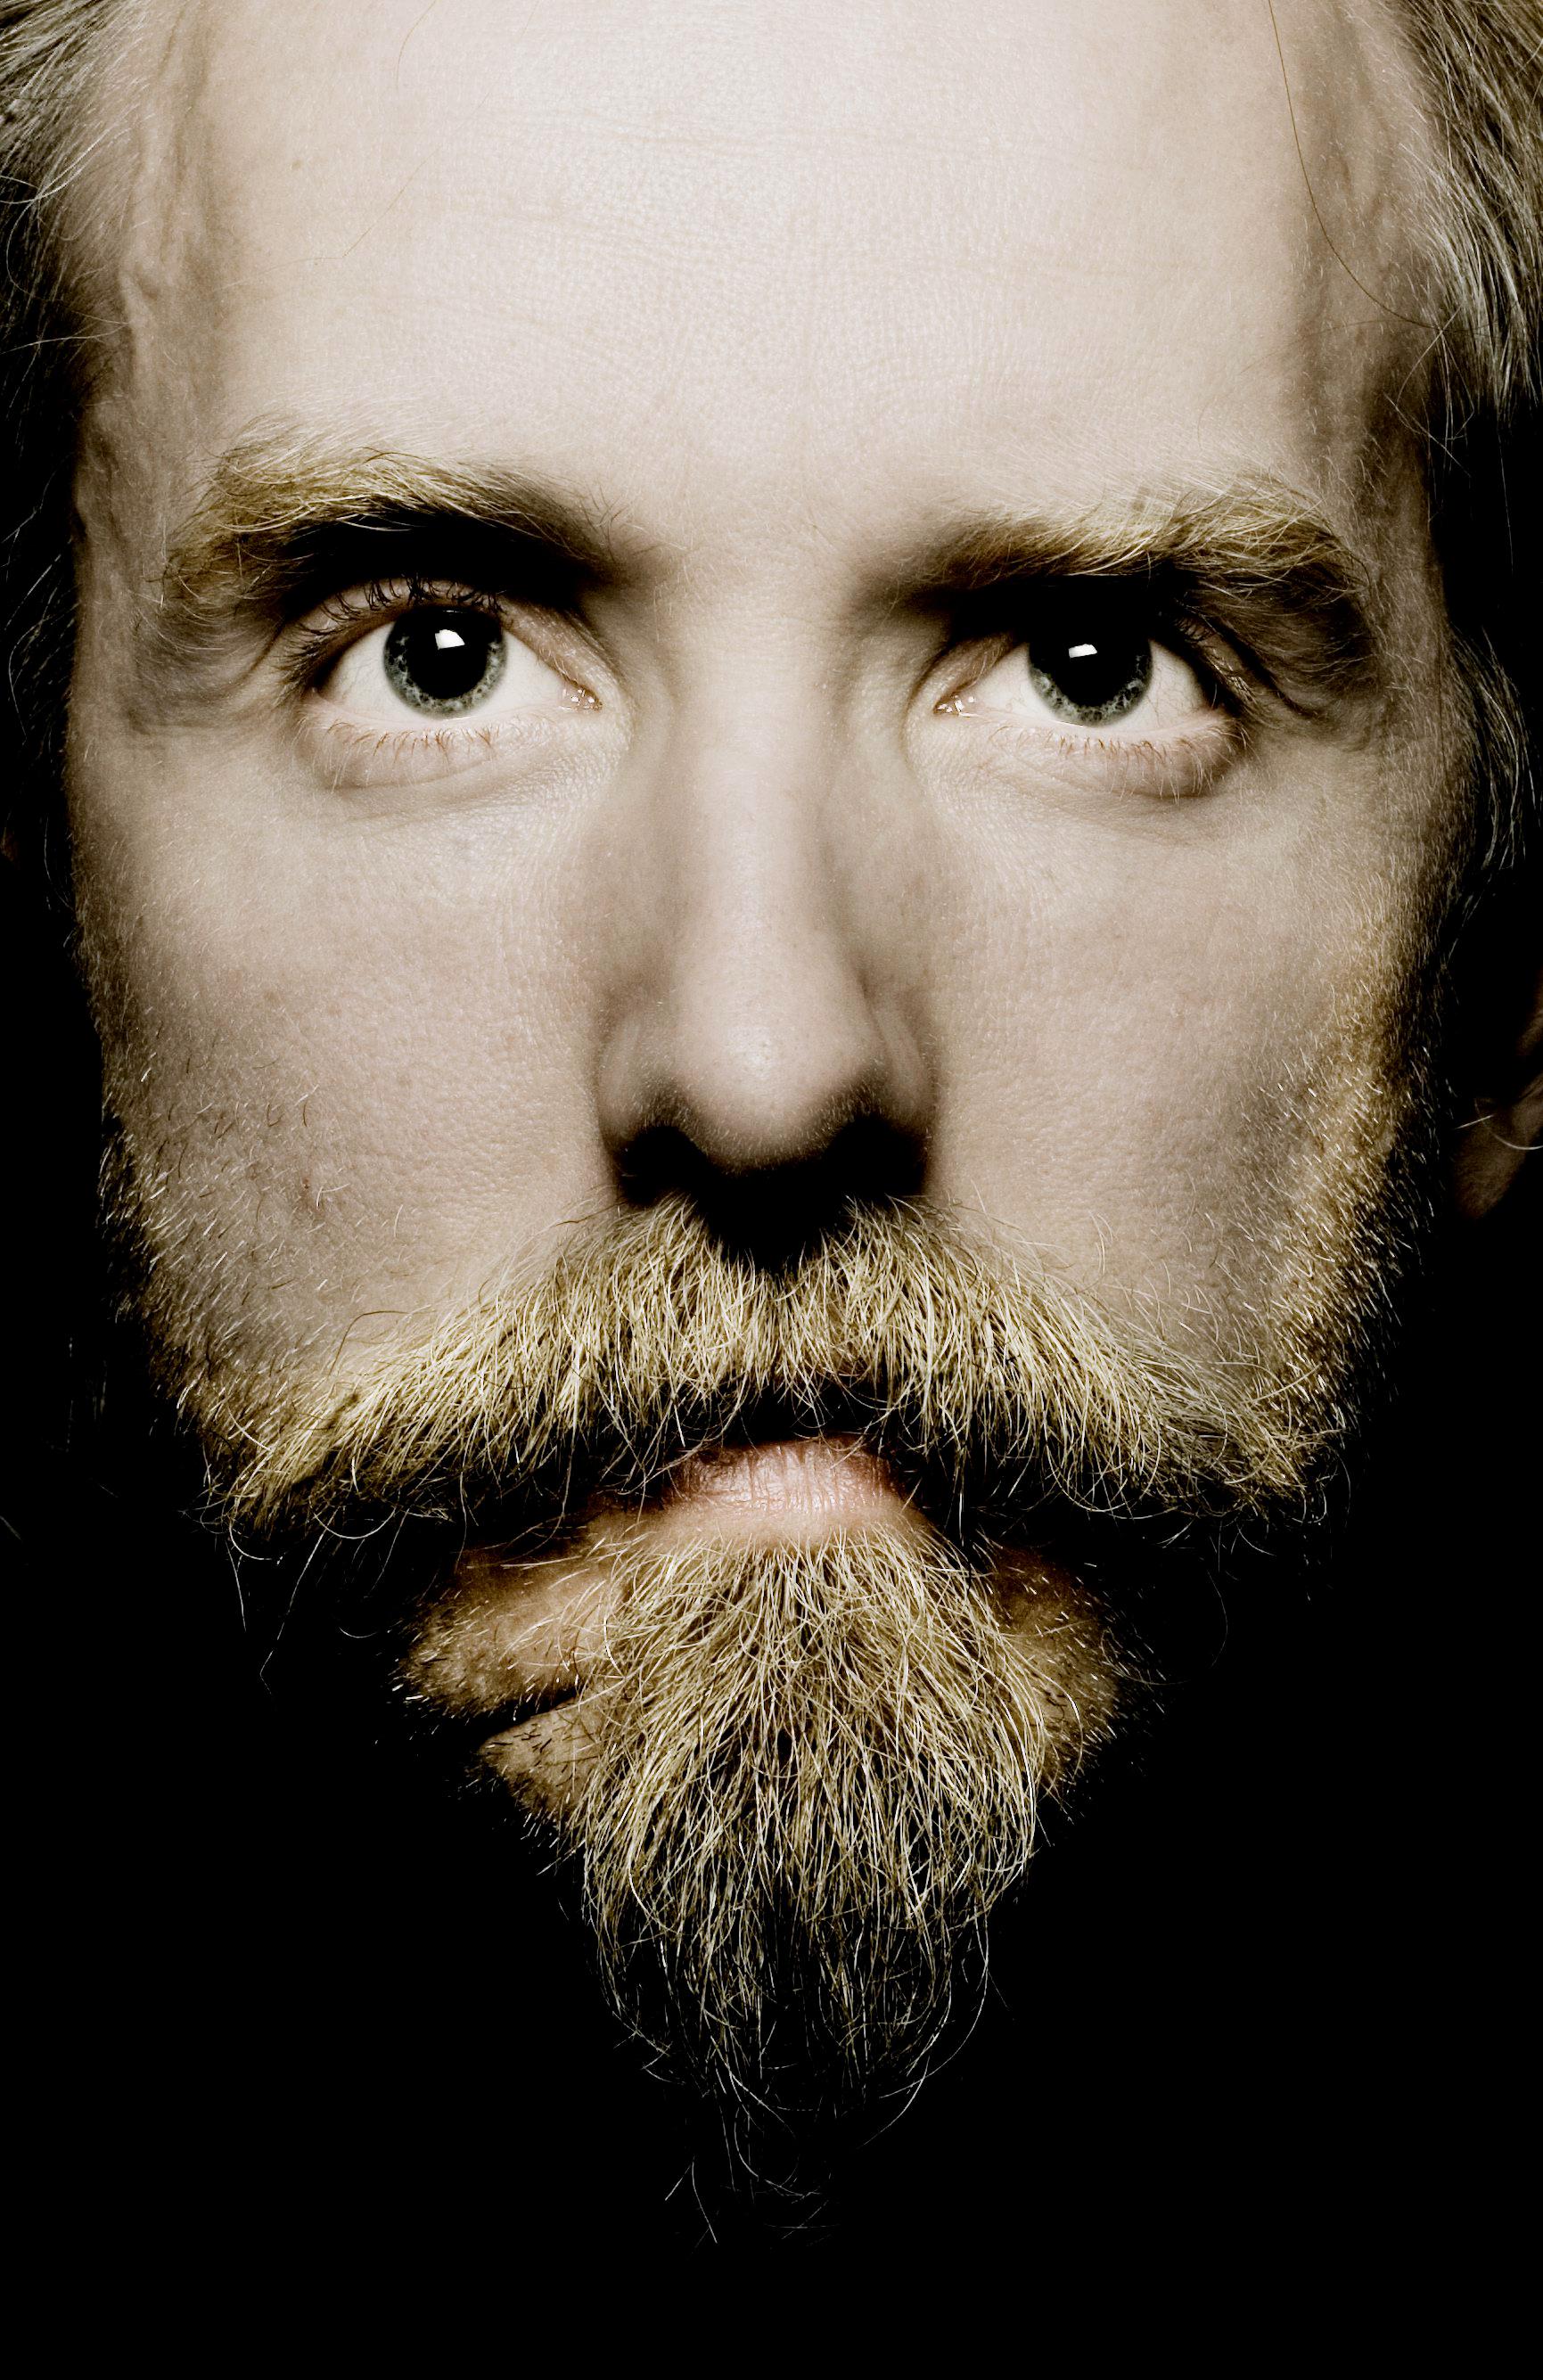 Under fängelsetiden fortsatte Vikernes att ge ut skivor under namnet Burzum.